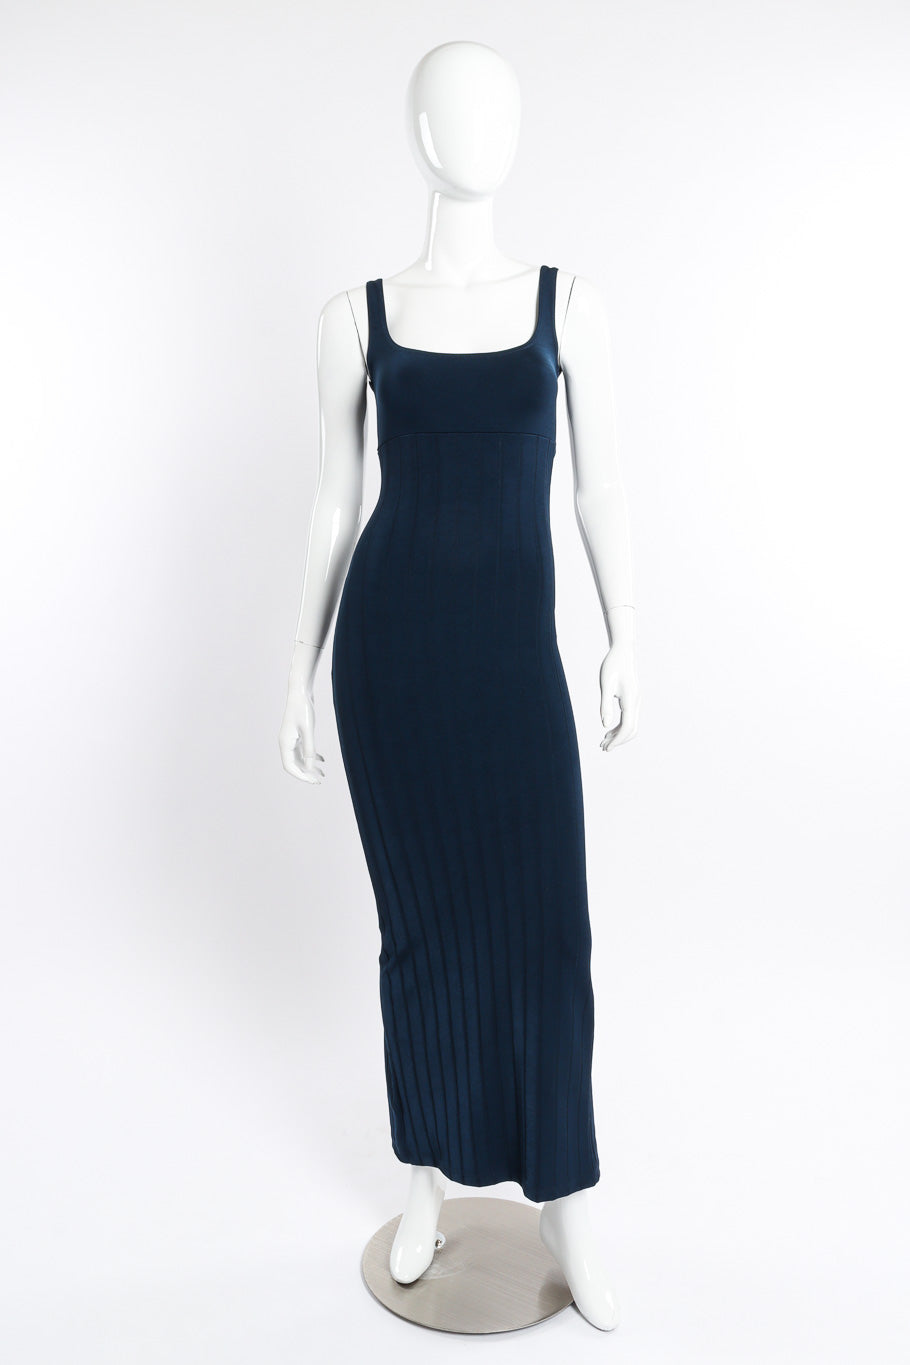 Vintage Liza Bruce Bodycon Column Dress front on mannequin @recessla